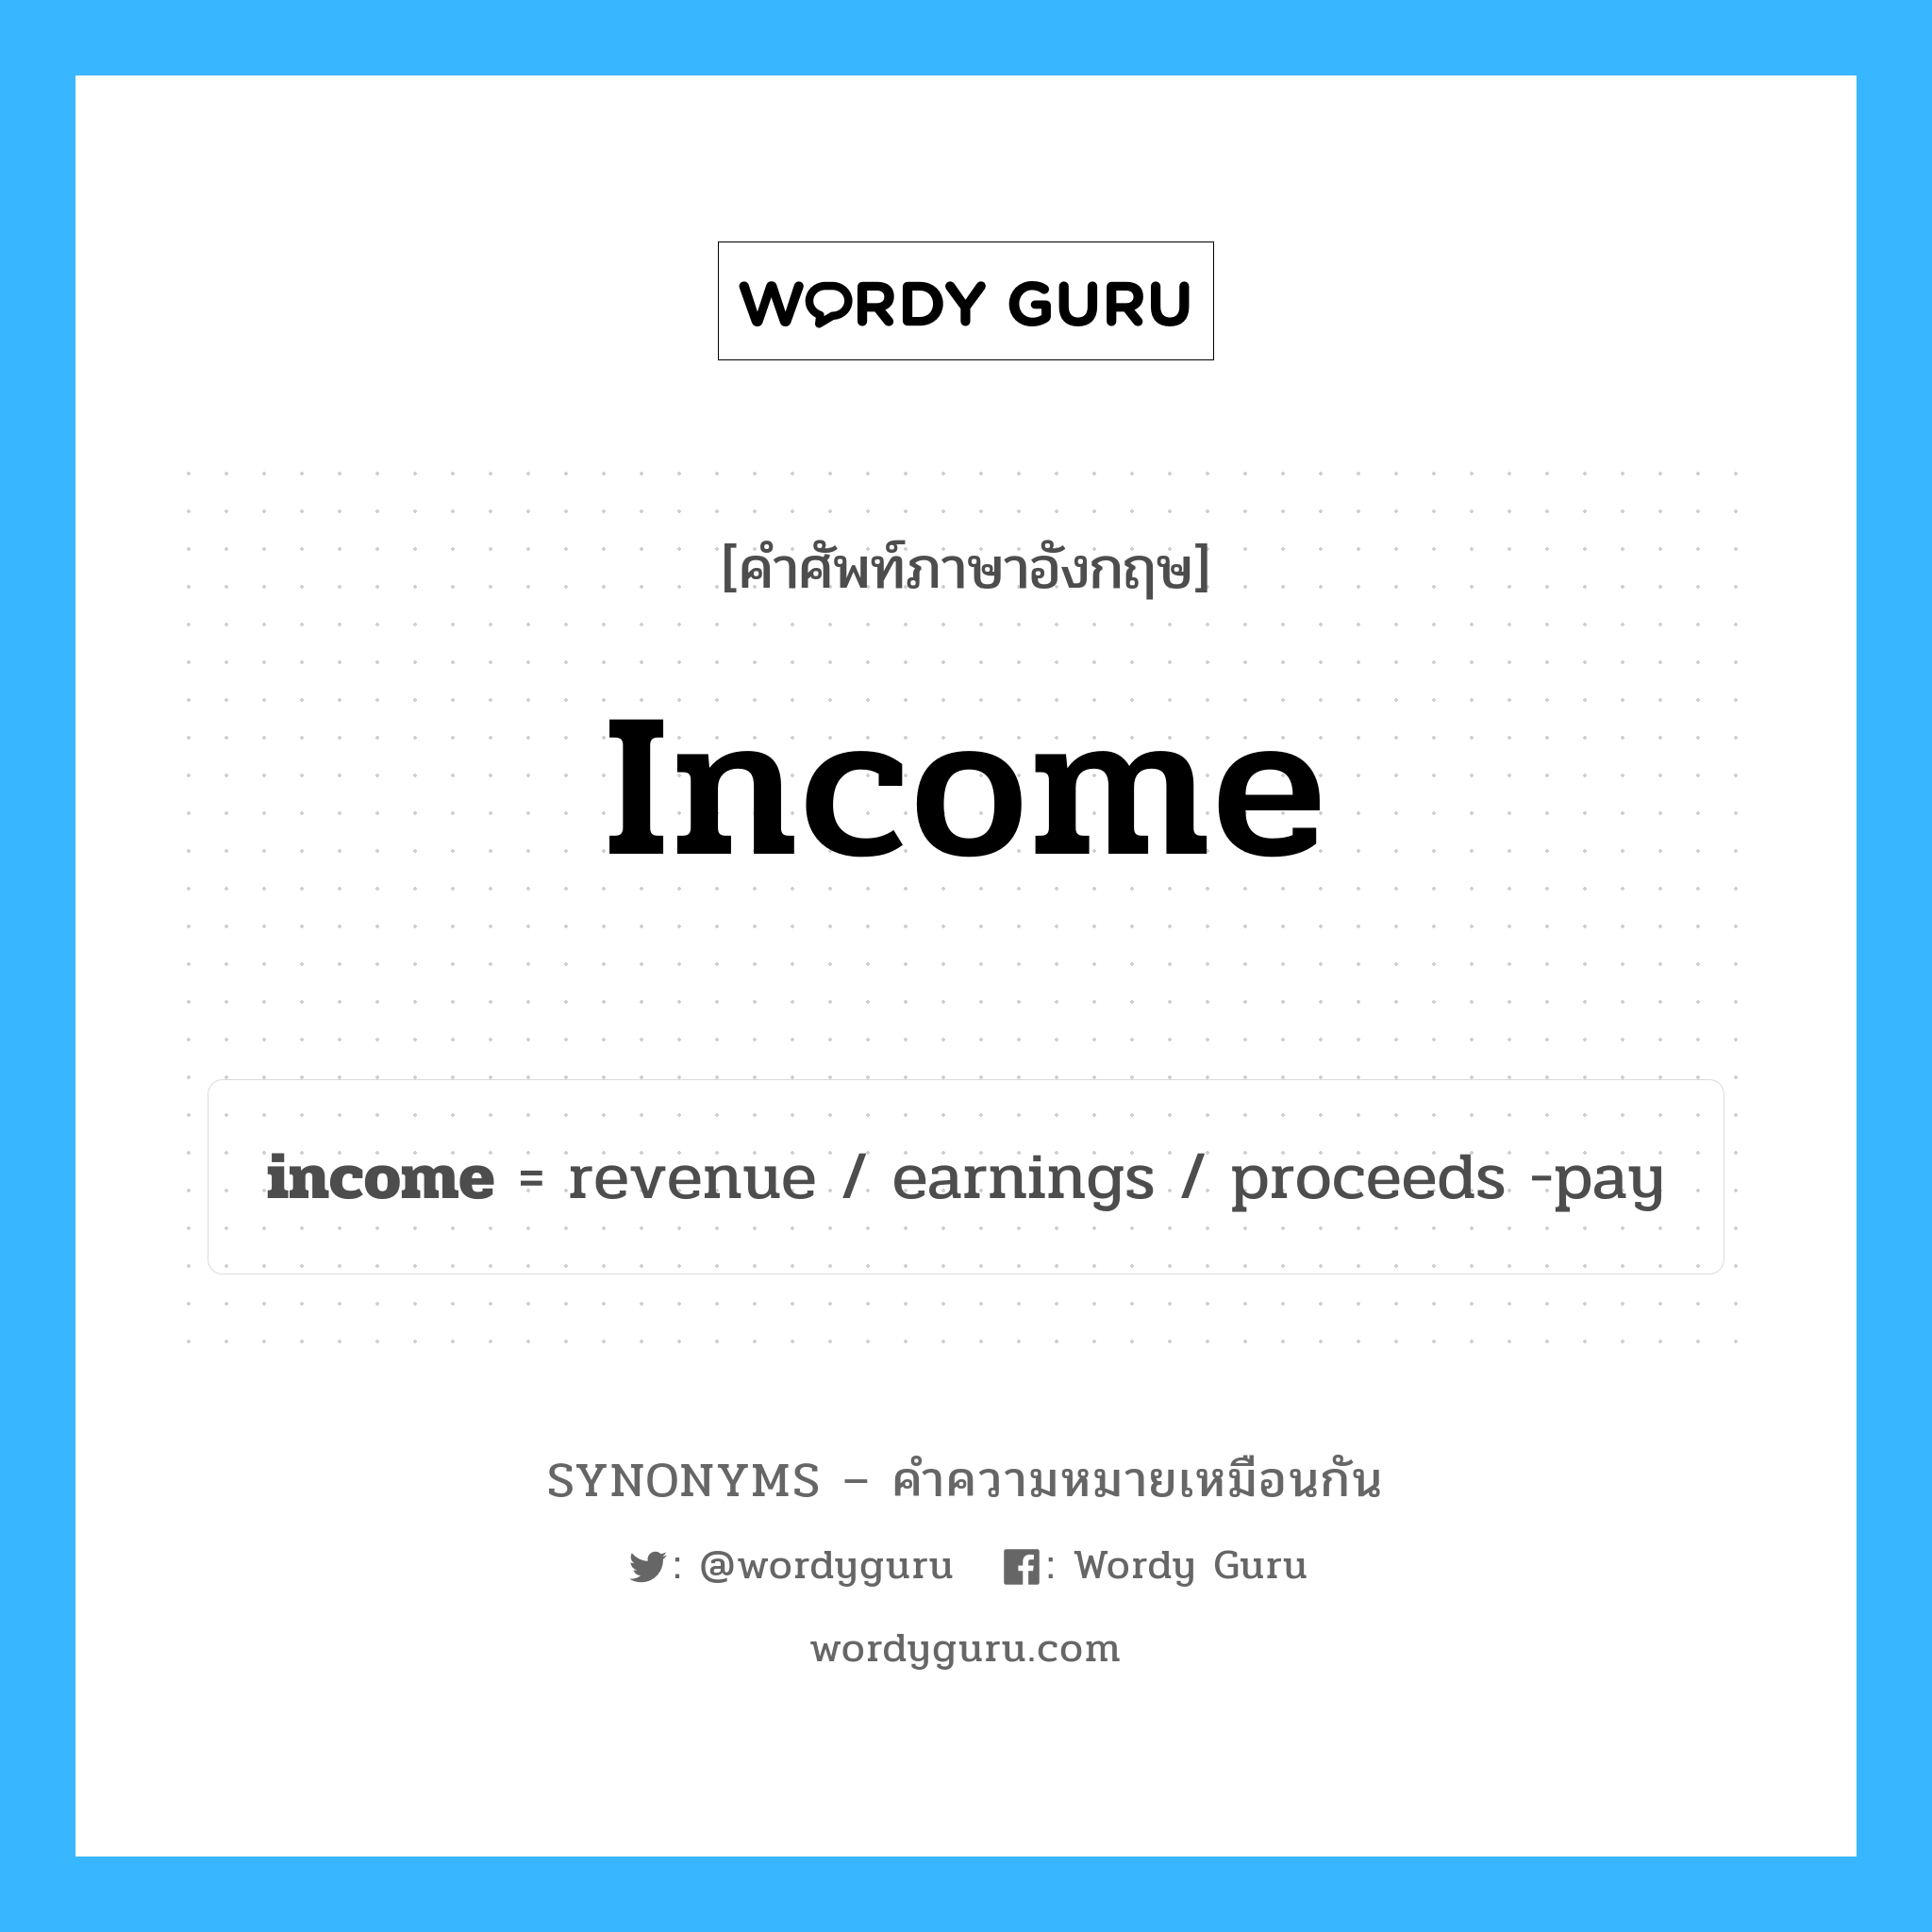 revenue เป็นหนึ่งใน income และมีคำอื่น ๆ อีกดังนี้, คำศัพท์ภาษาอังกฤษ revenue ความหมายคล้ายกันกับ income แปลว่า รายได้ หมวด income